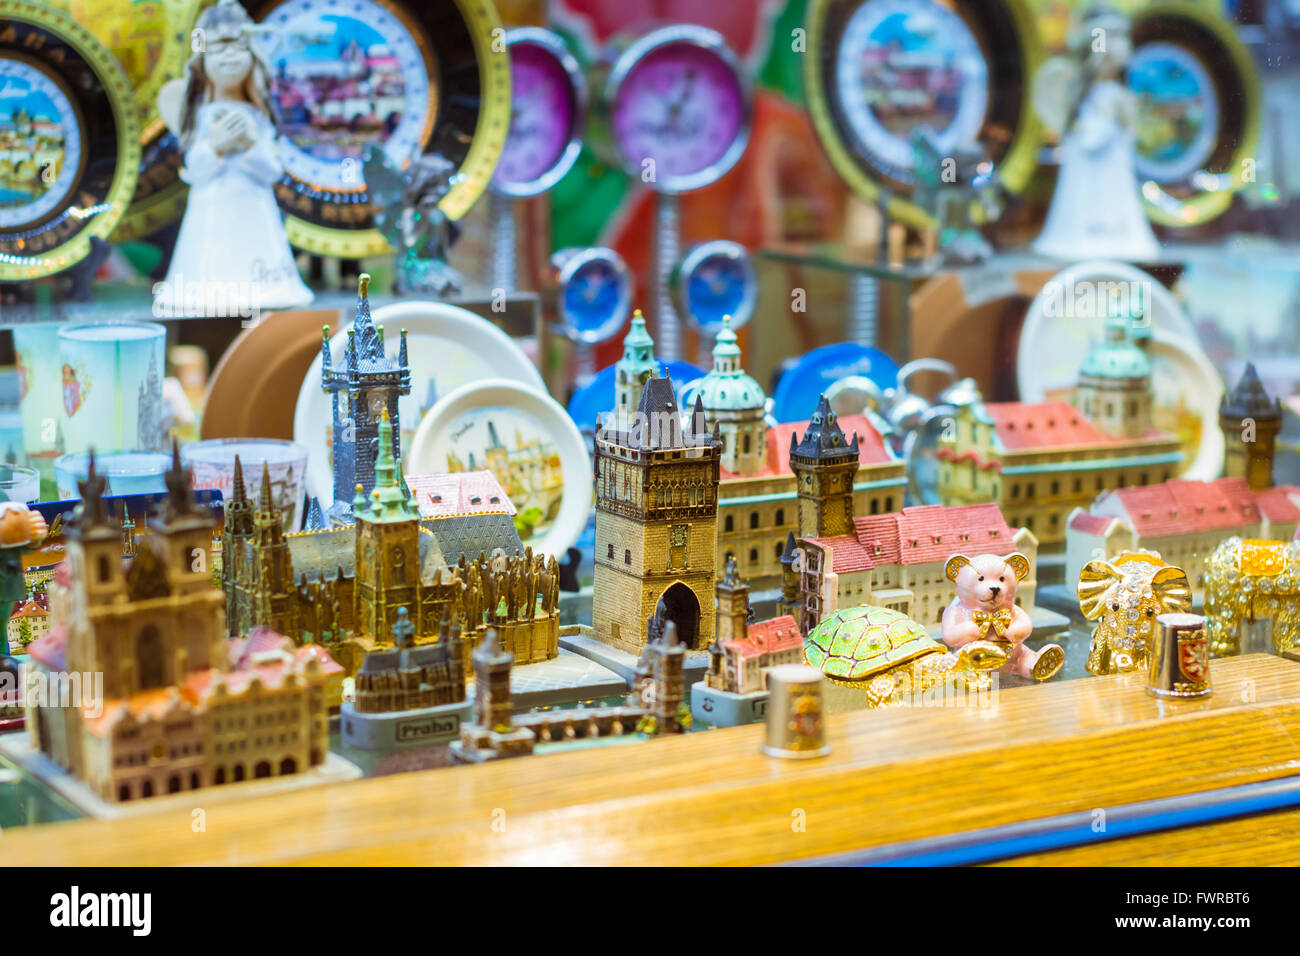 PRAGUE, CZECH REPUBLIC - AUGUST 25, 2015: Souvenirs and decorative buildings and castles on the shelf of the gift shop, Prague Stock Photo